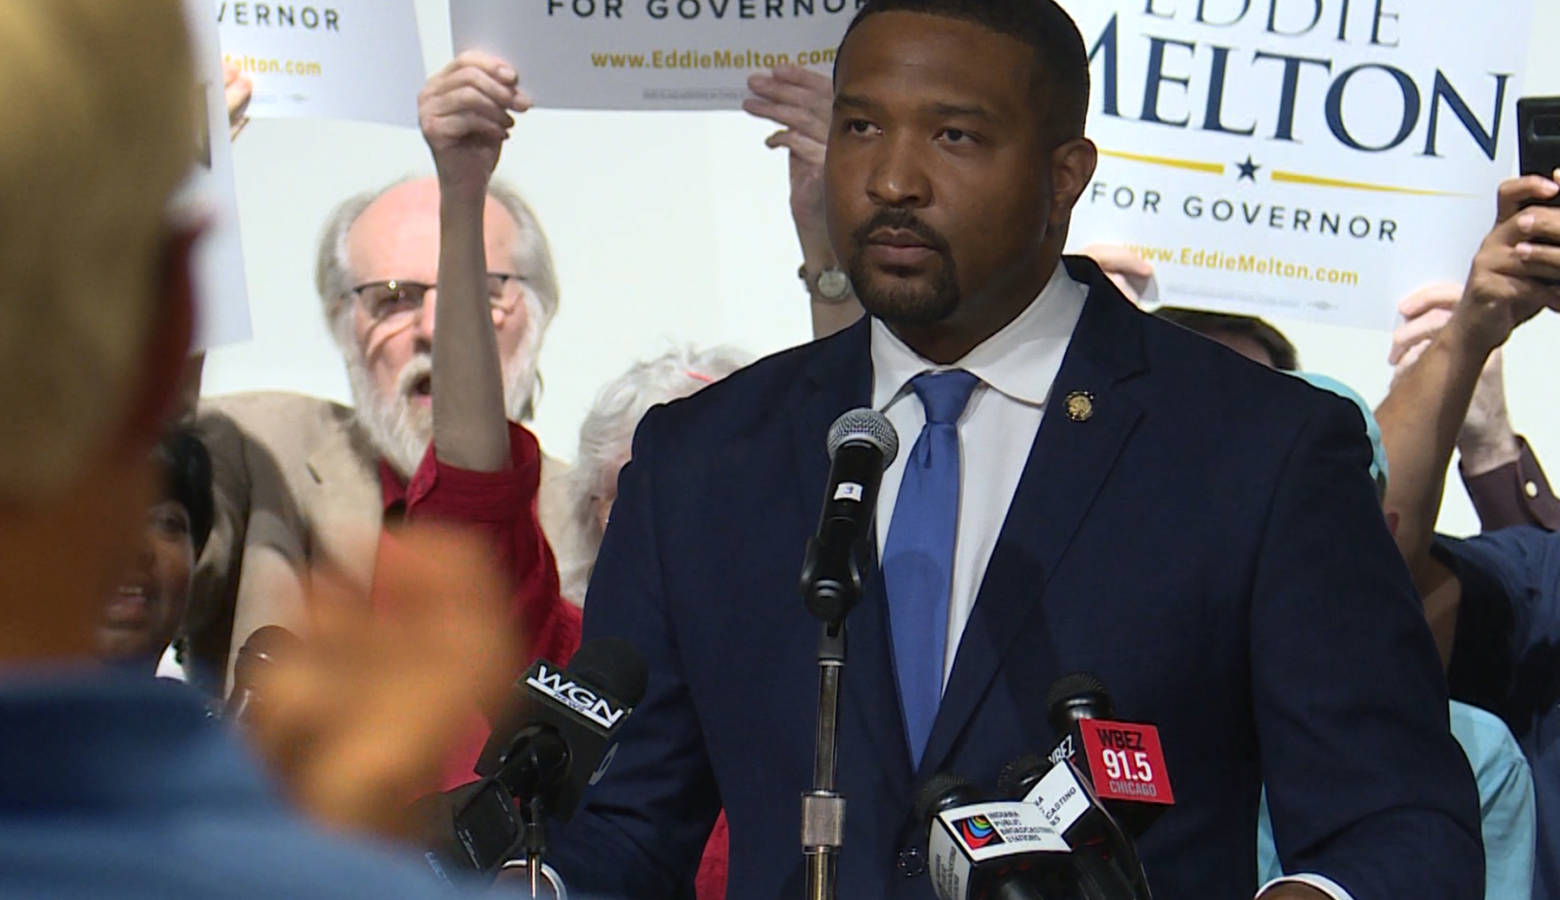 Sen. Eddie Melton (D-Gary) launched his gubernatorial bid in his hometown, with about 200 supporters cheering him on. (Lauren Chapman/IPB News)